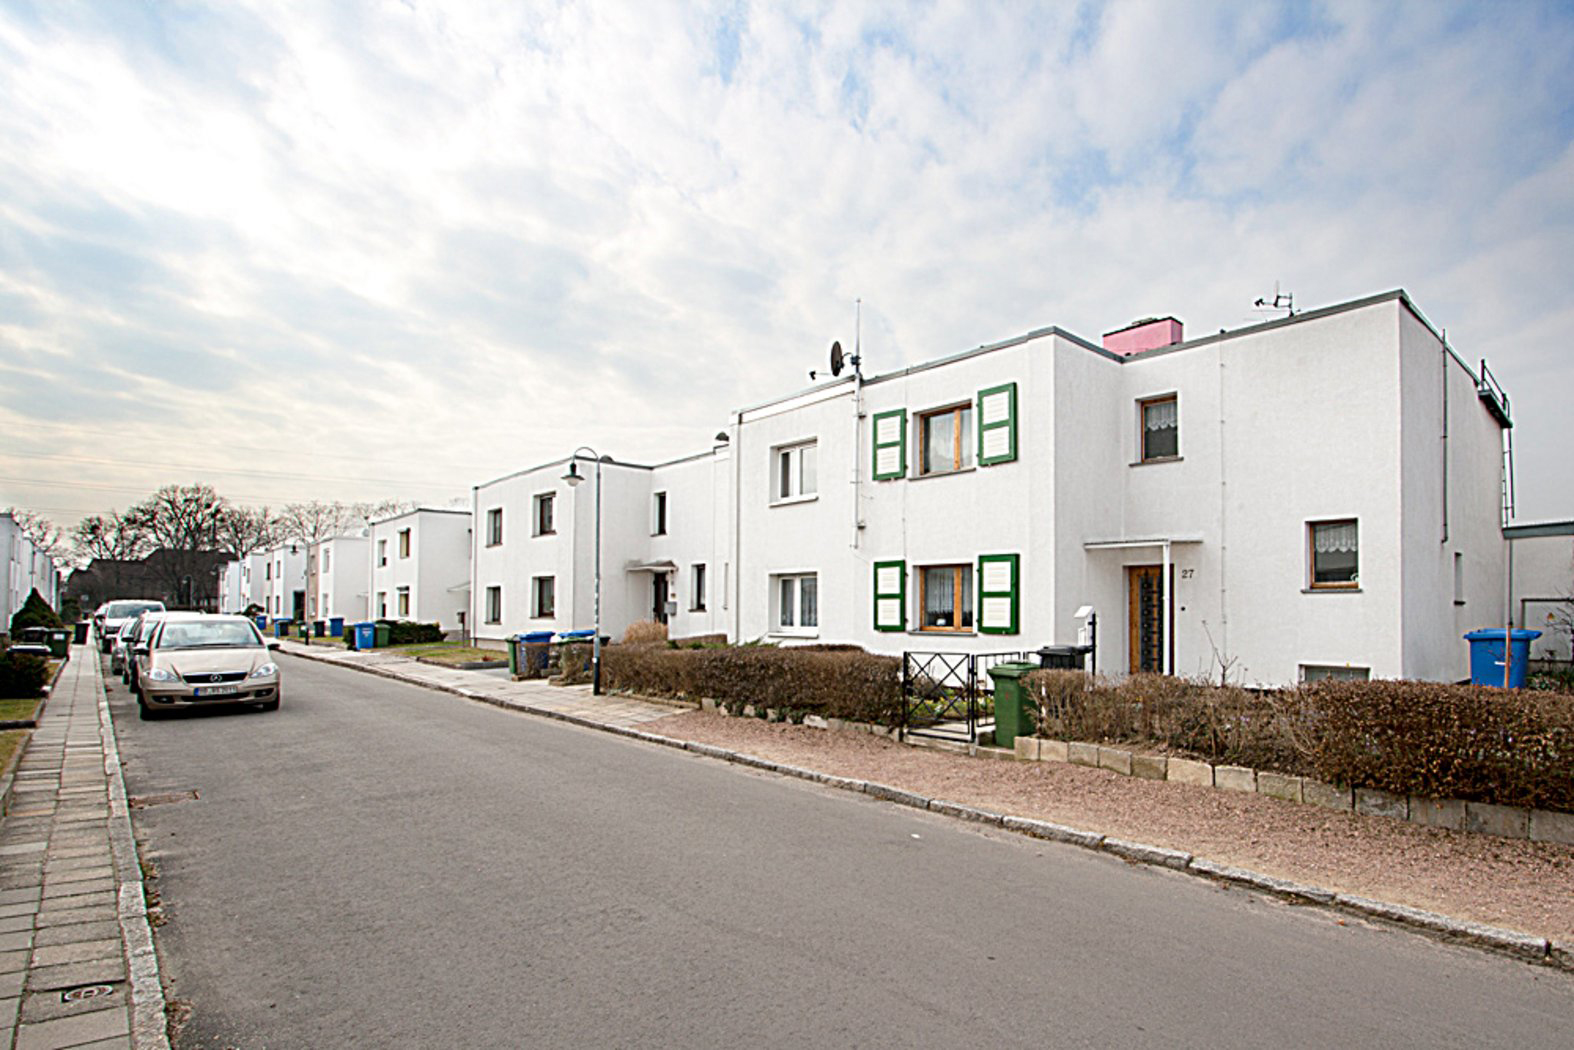 Where to experience the Bauhaus in 2019: Dessau Törten